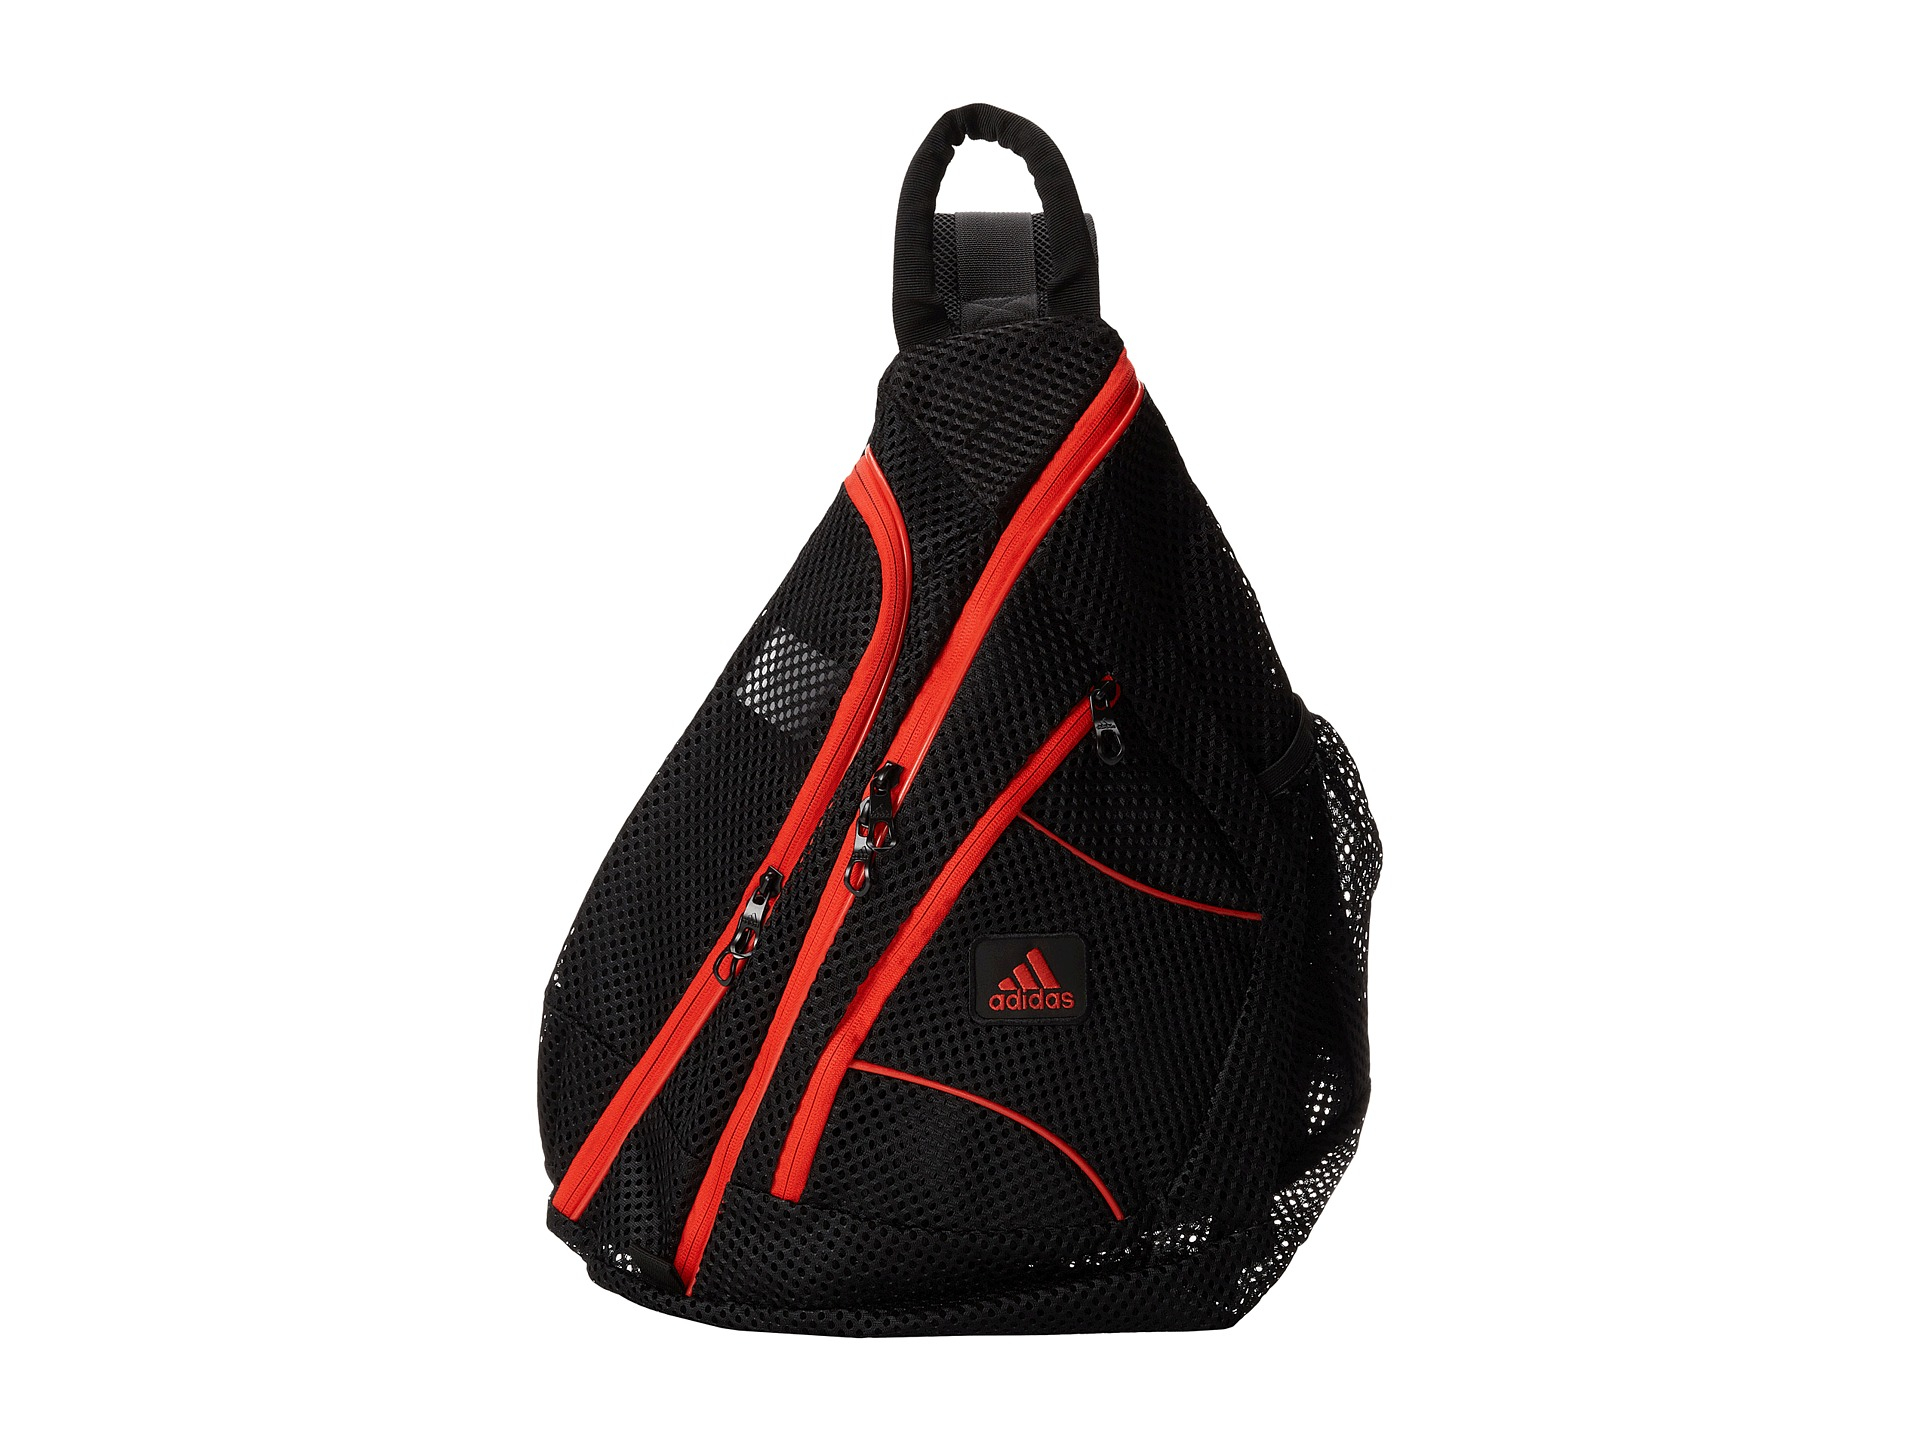 adidas mesh sling backpack